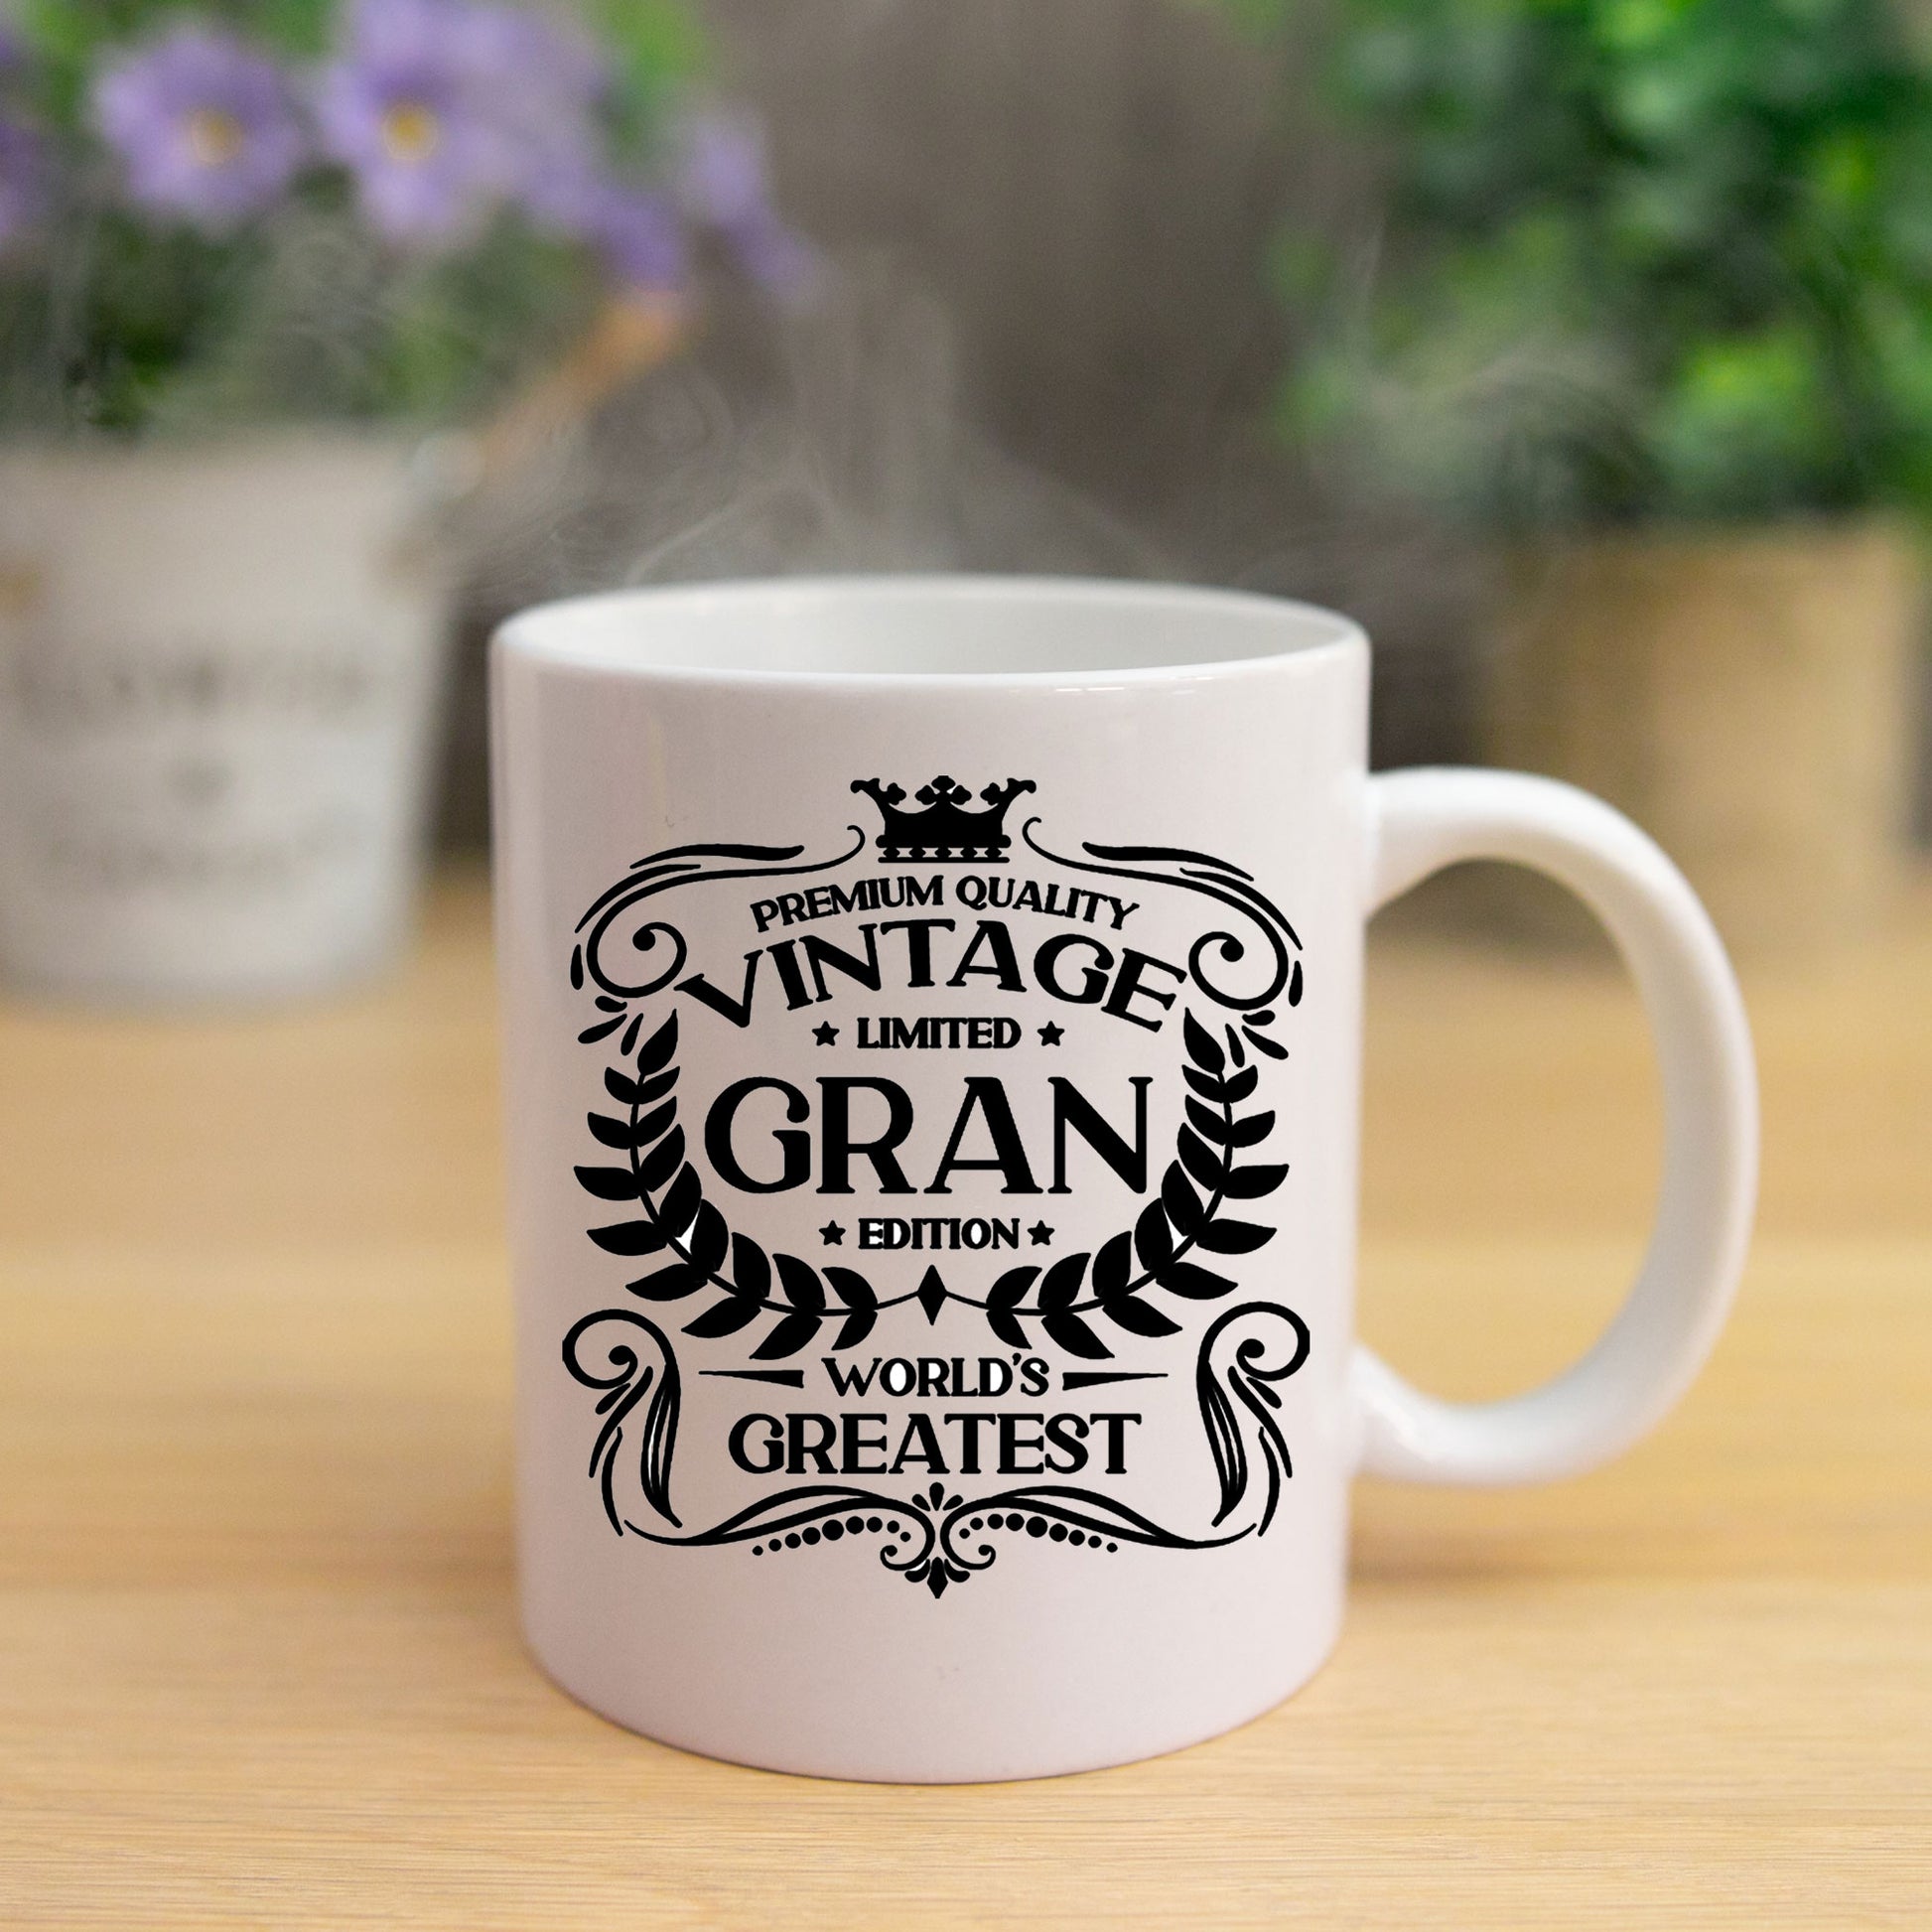 Vintage Worlds Greatest Gran Mug and/or Coaster  - Always Looking Good -   